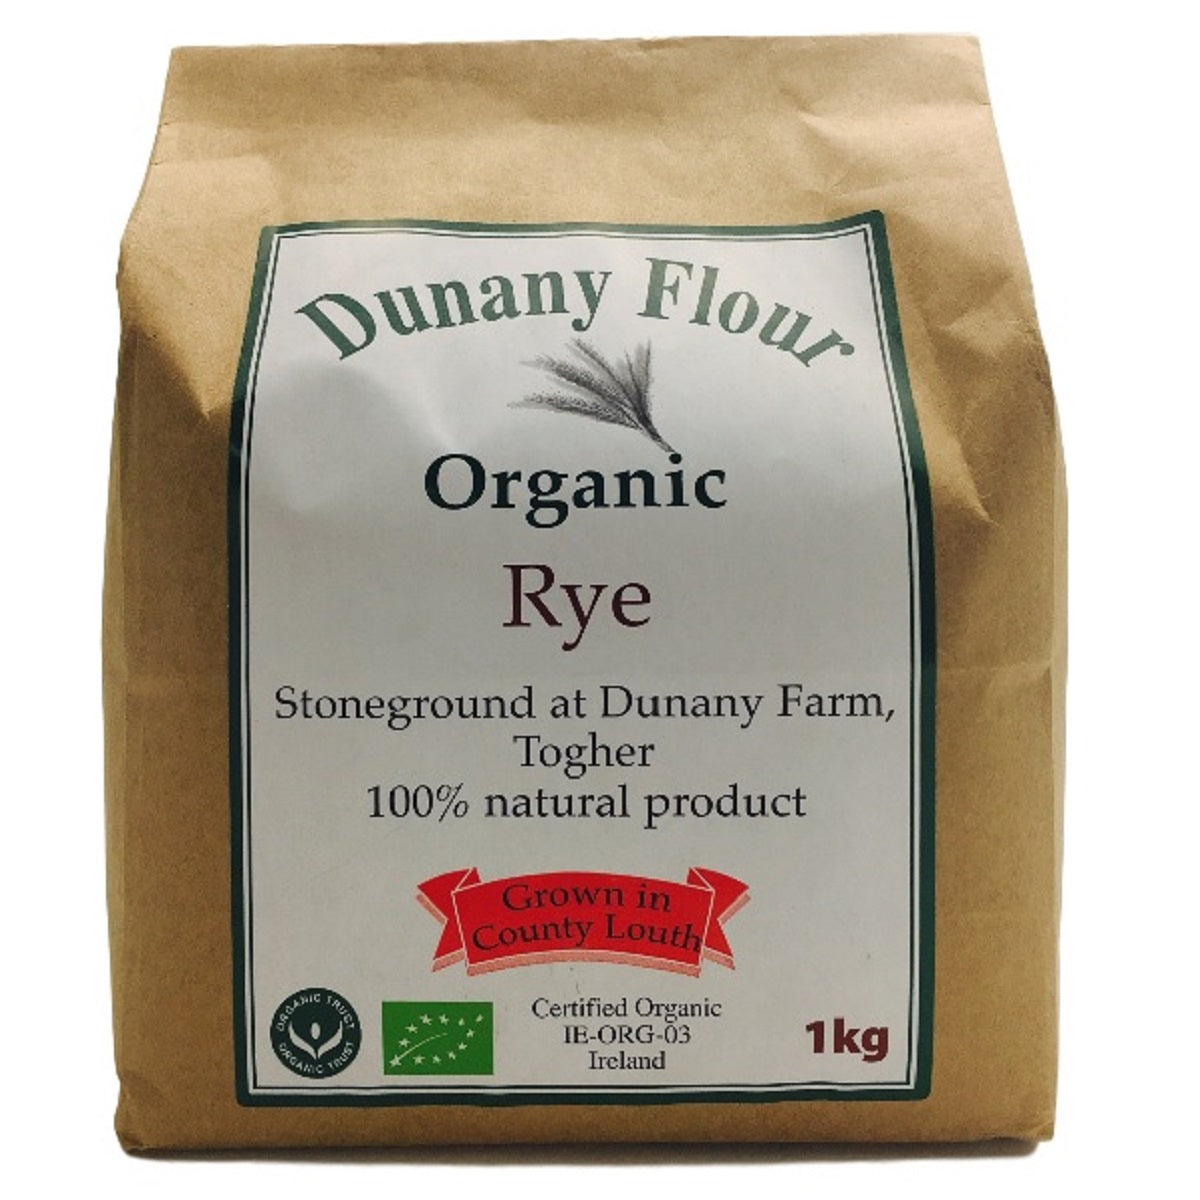 Dunany Flour Organic Rye 1kg